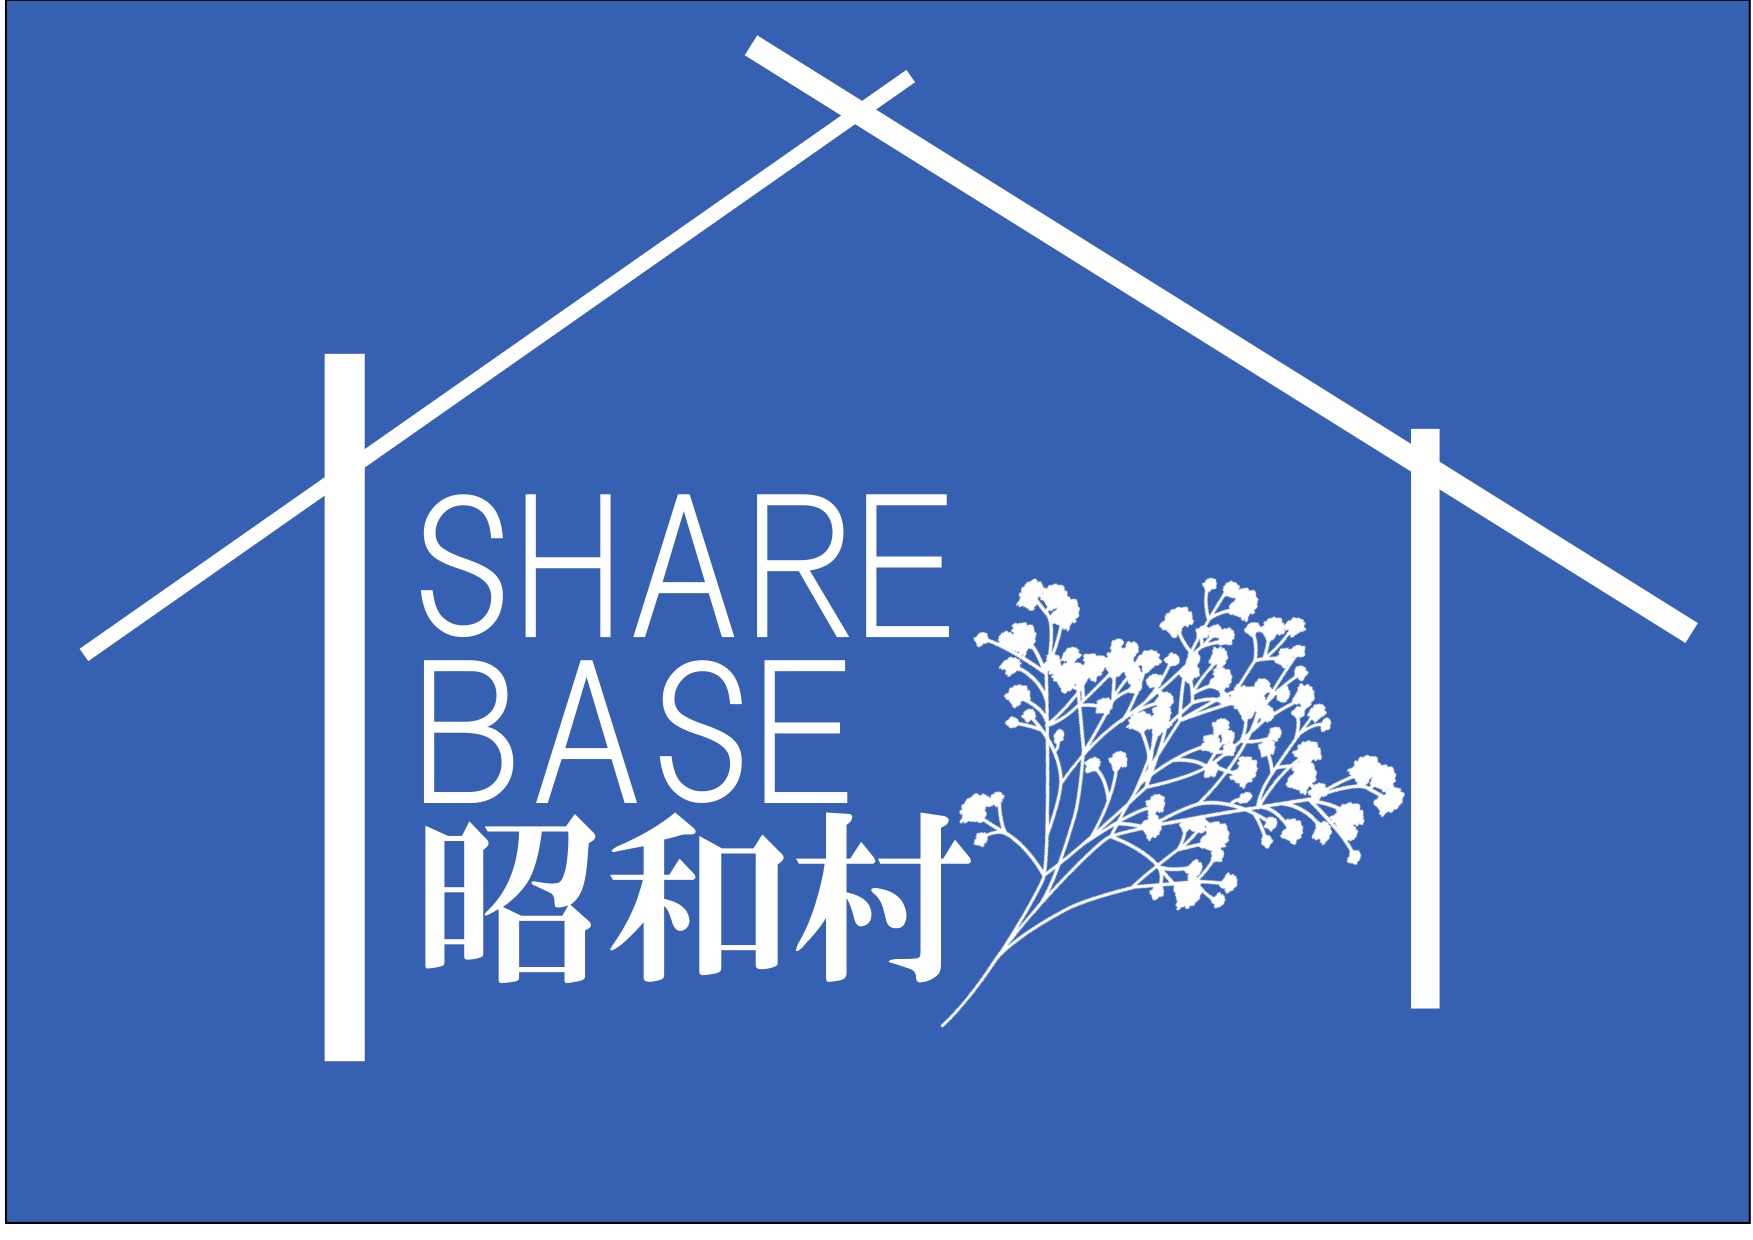 SHARE BASE 昭和村